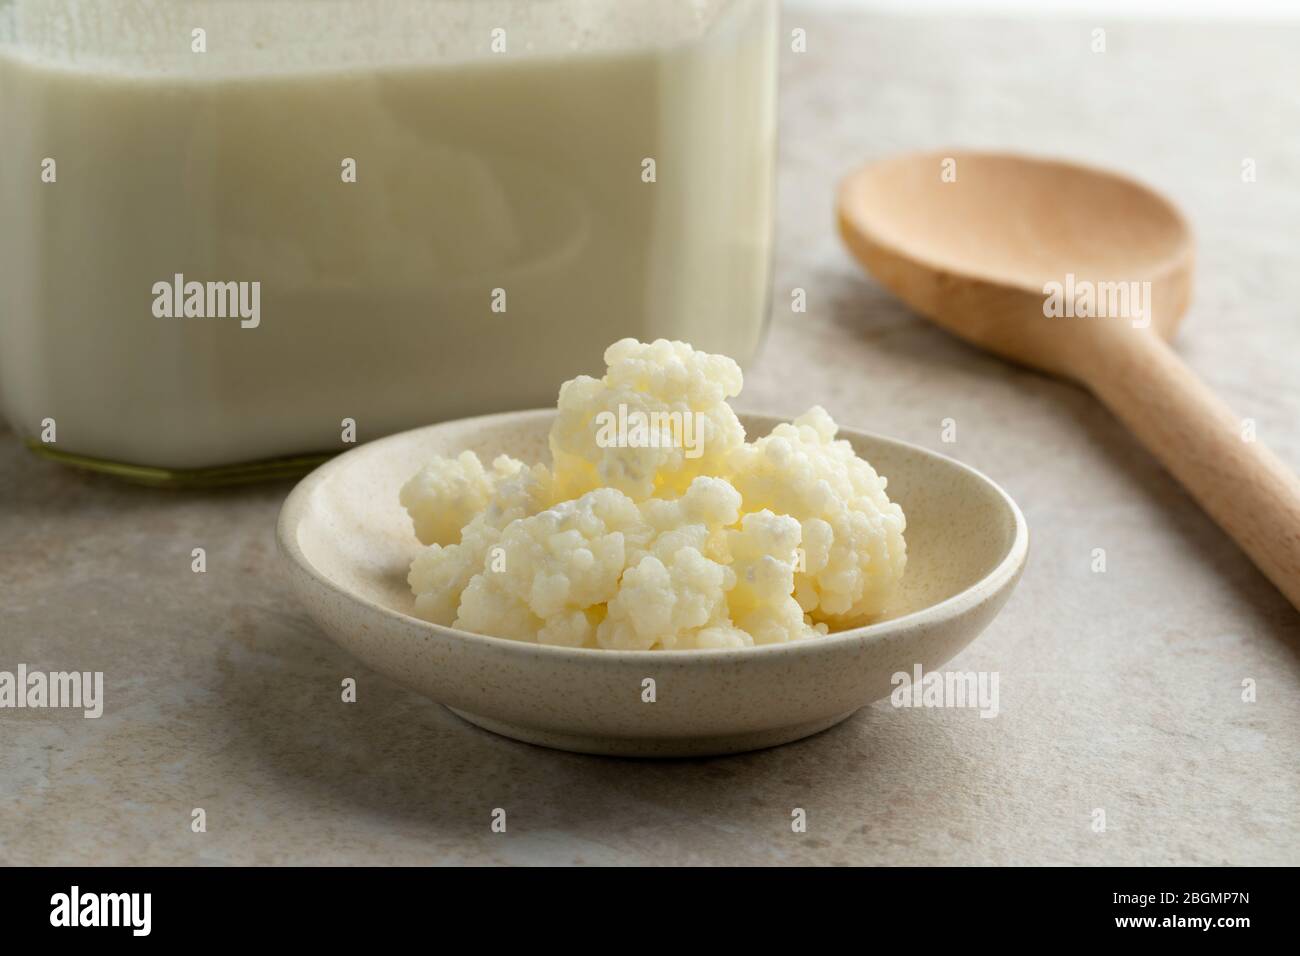 Latte probiotico biologico chefir grani davanti a un bicchiere di latte  Kefir Foto stock - Alamy